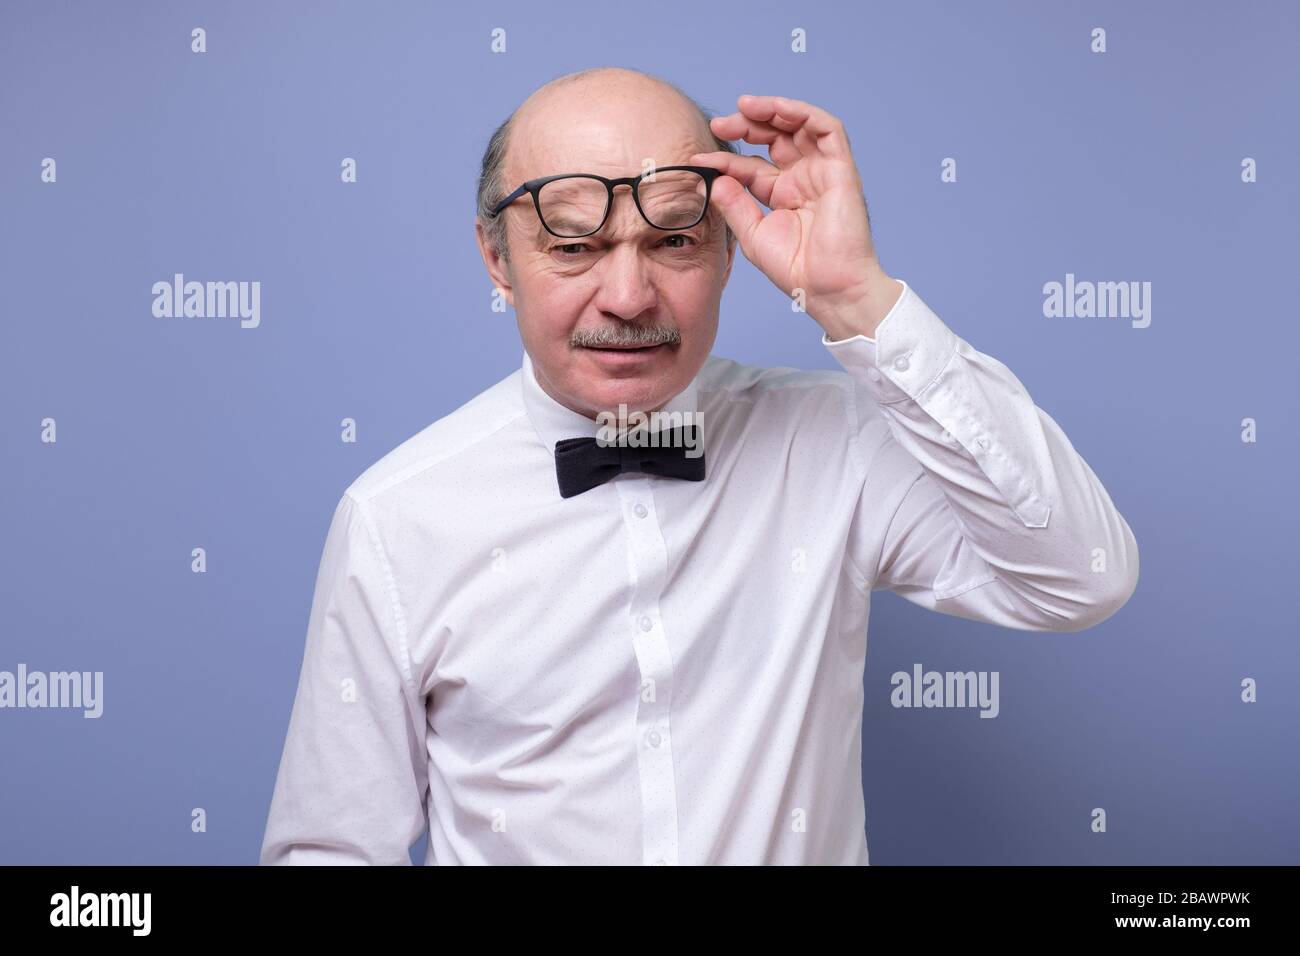 Amazed senior man looking at camera through glasses having some doubts Stock Photo